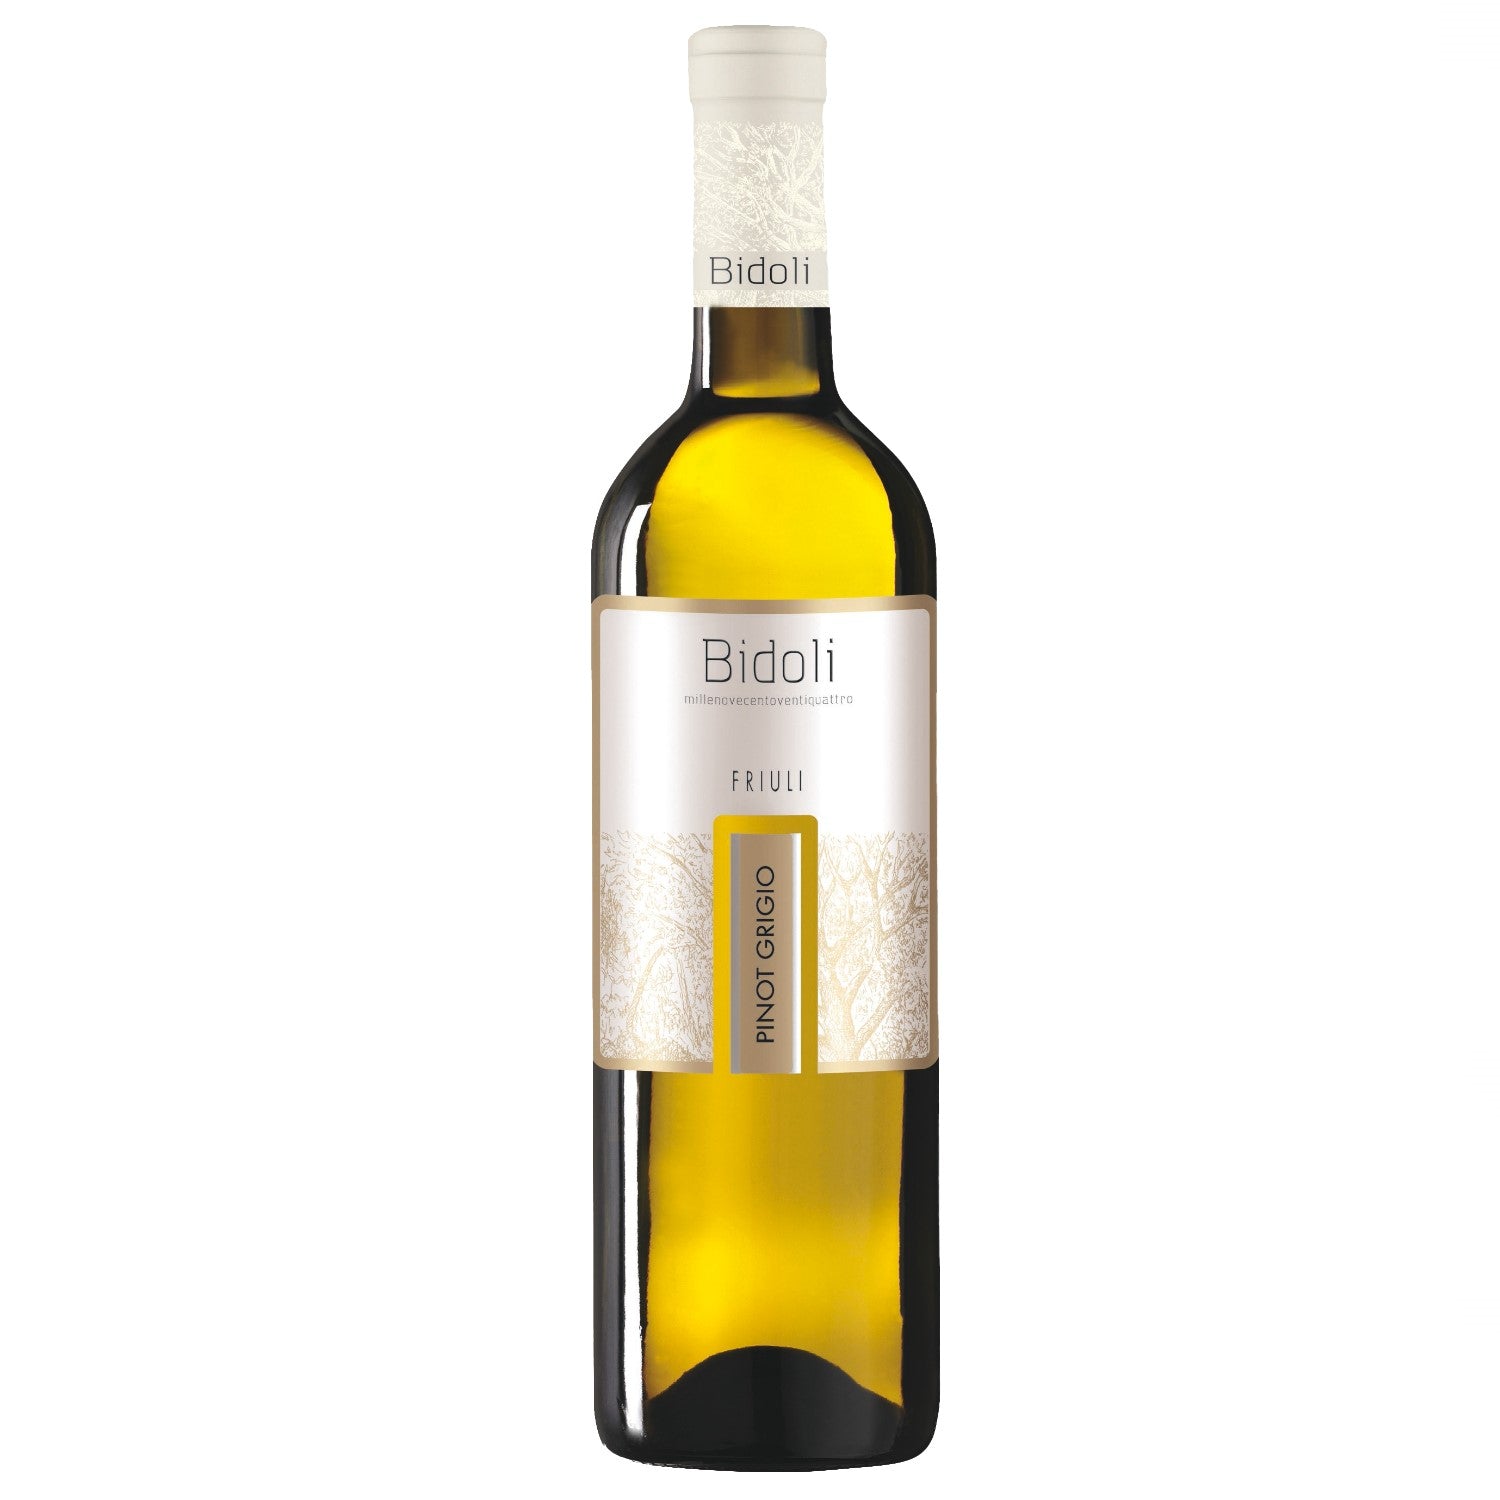 Bidoli Vini Pinot Grigio DOC Friuli Grave Weißwein Wein trocken Italien (12 x 0.75l) - Versanel -